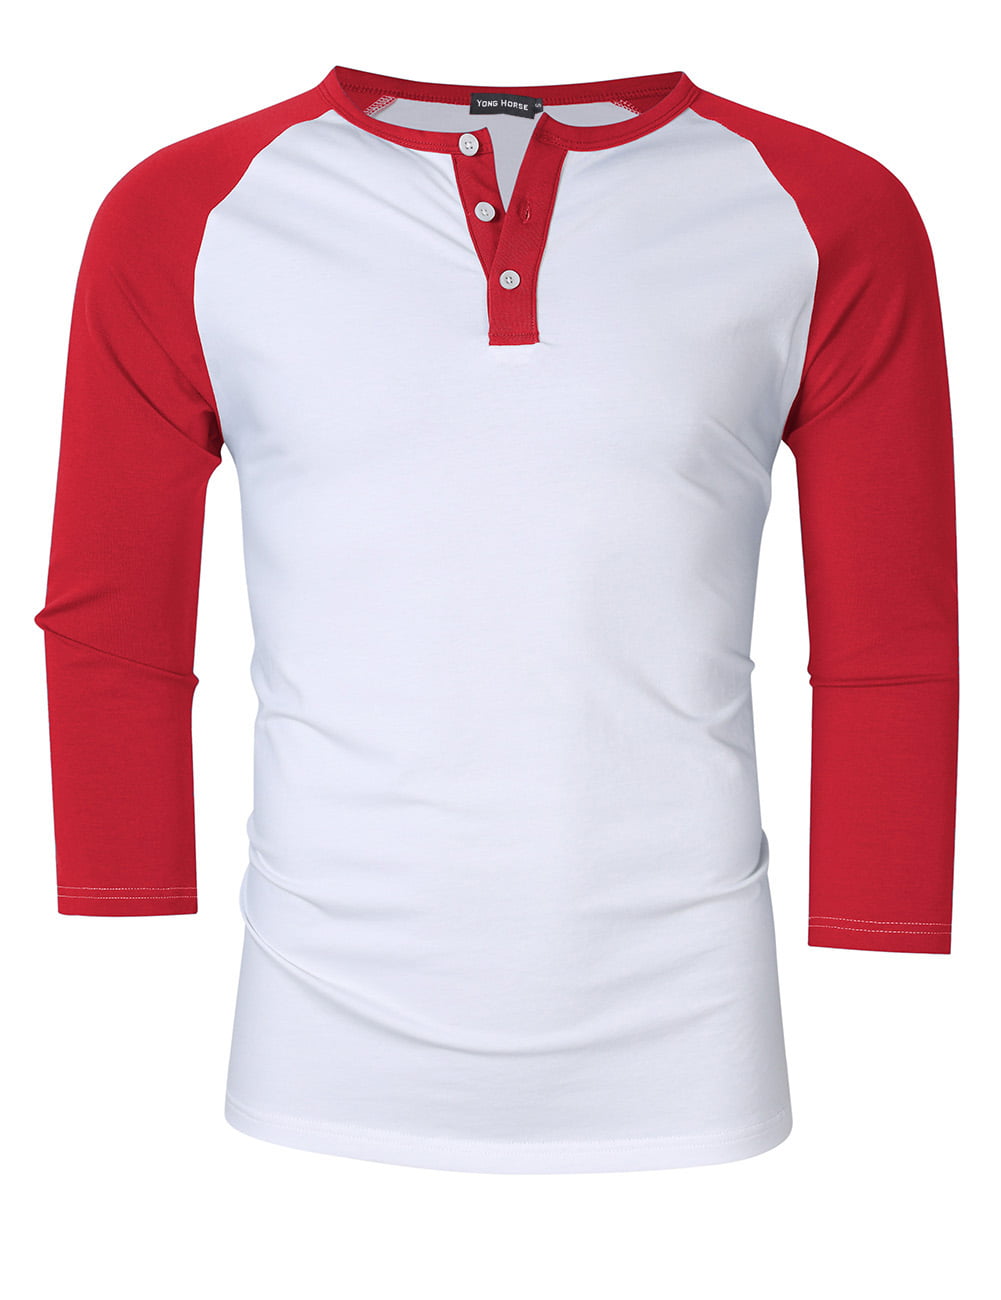 red and white raglan shirt